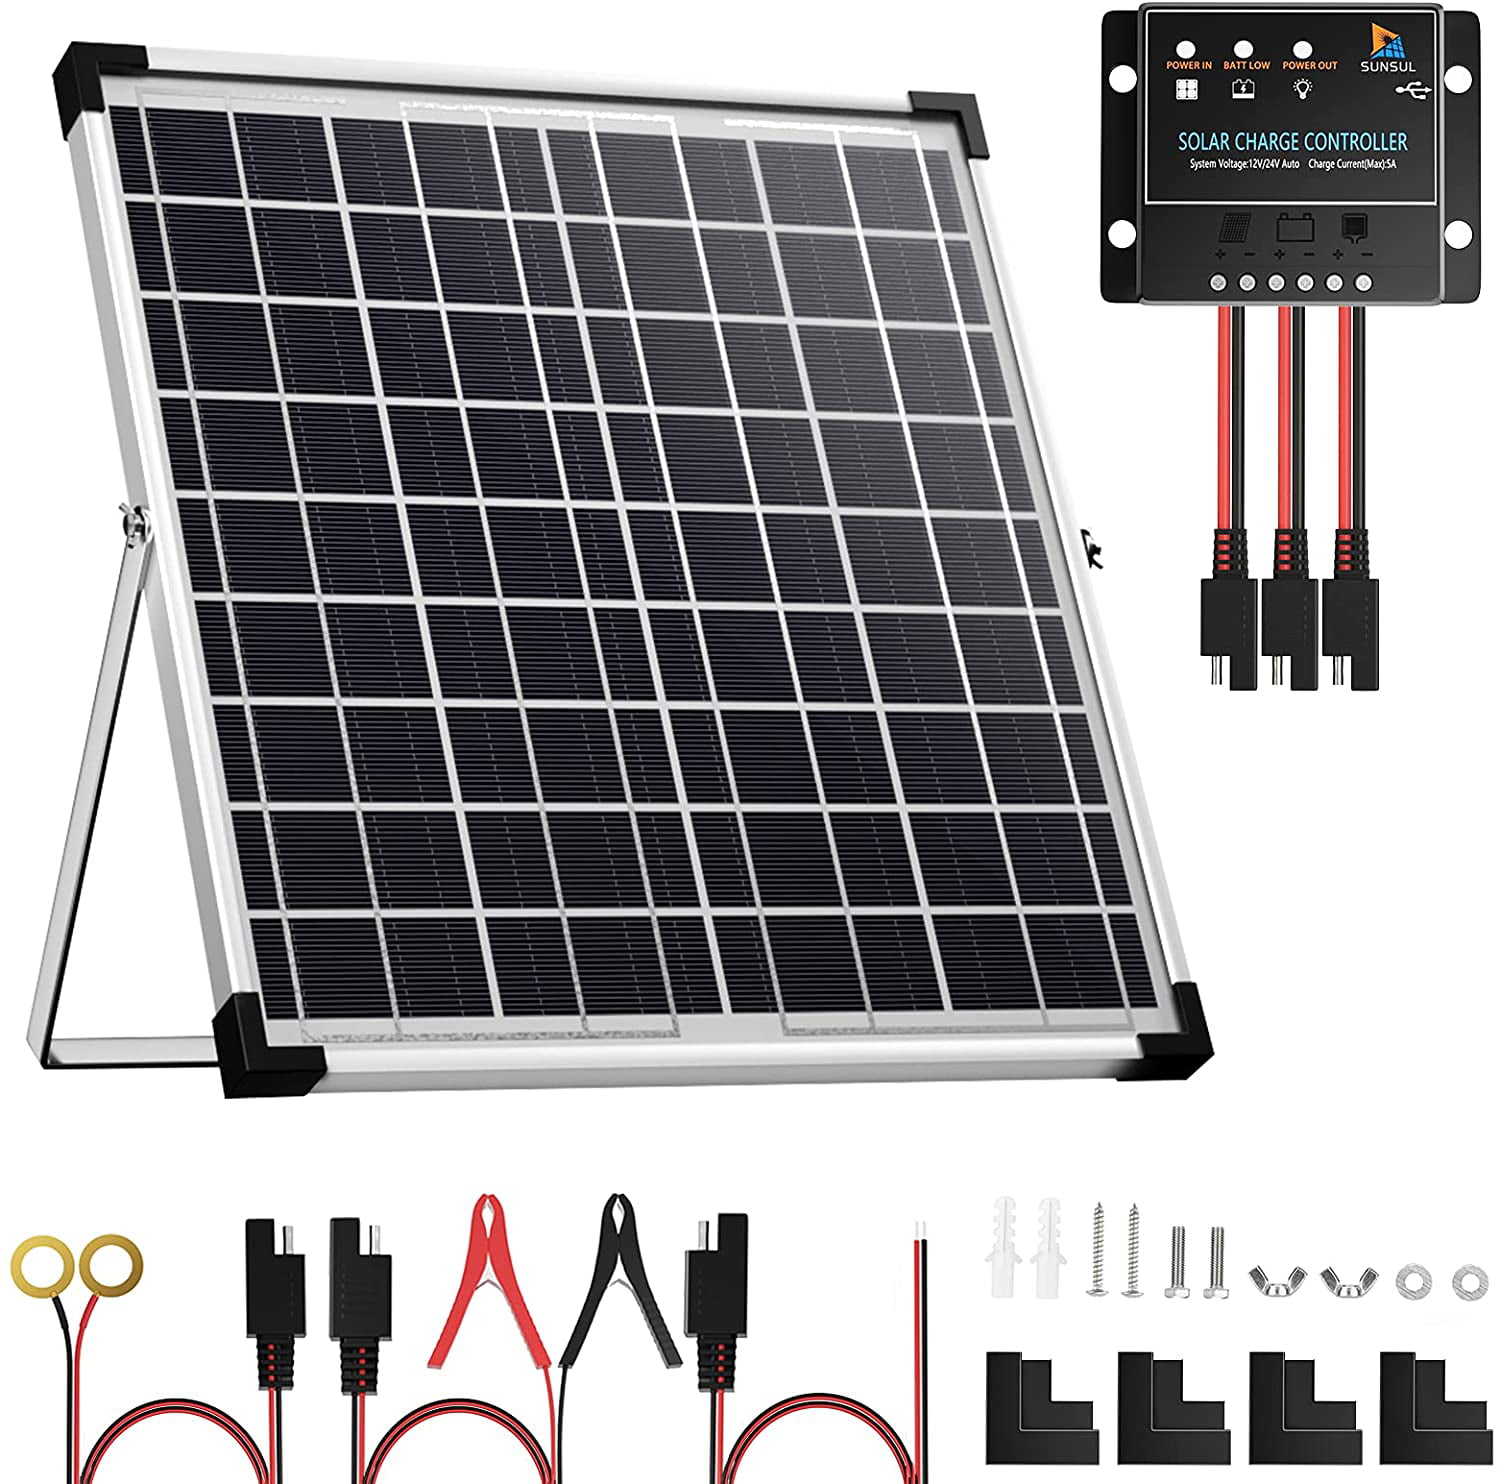 Coleman 15 Watt 12 Volt Amorphpus Solar Panel 12V 15W  Free Shipping 